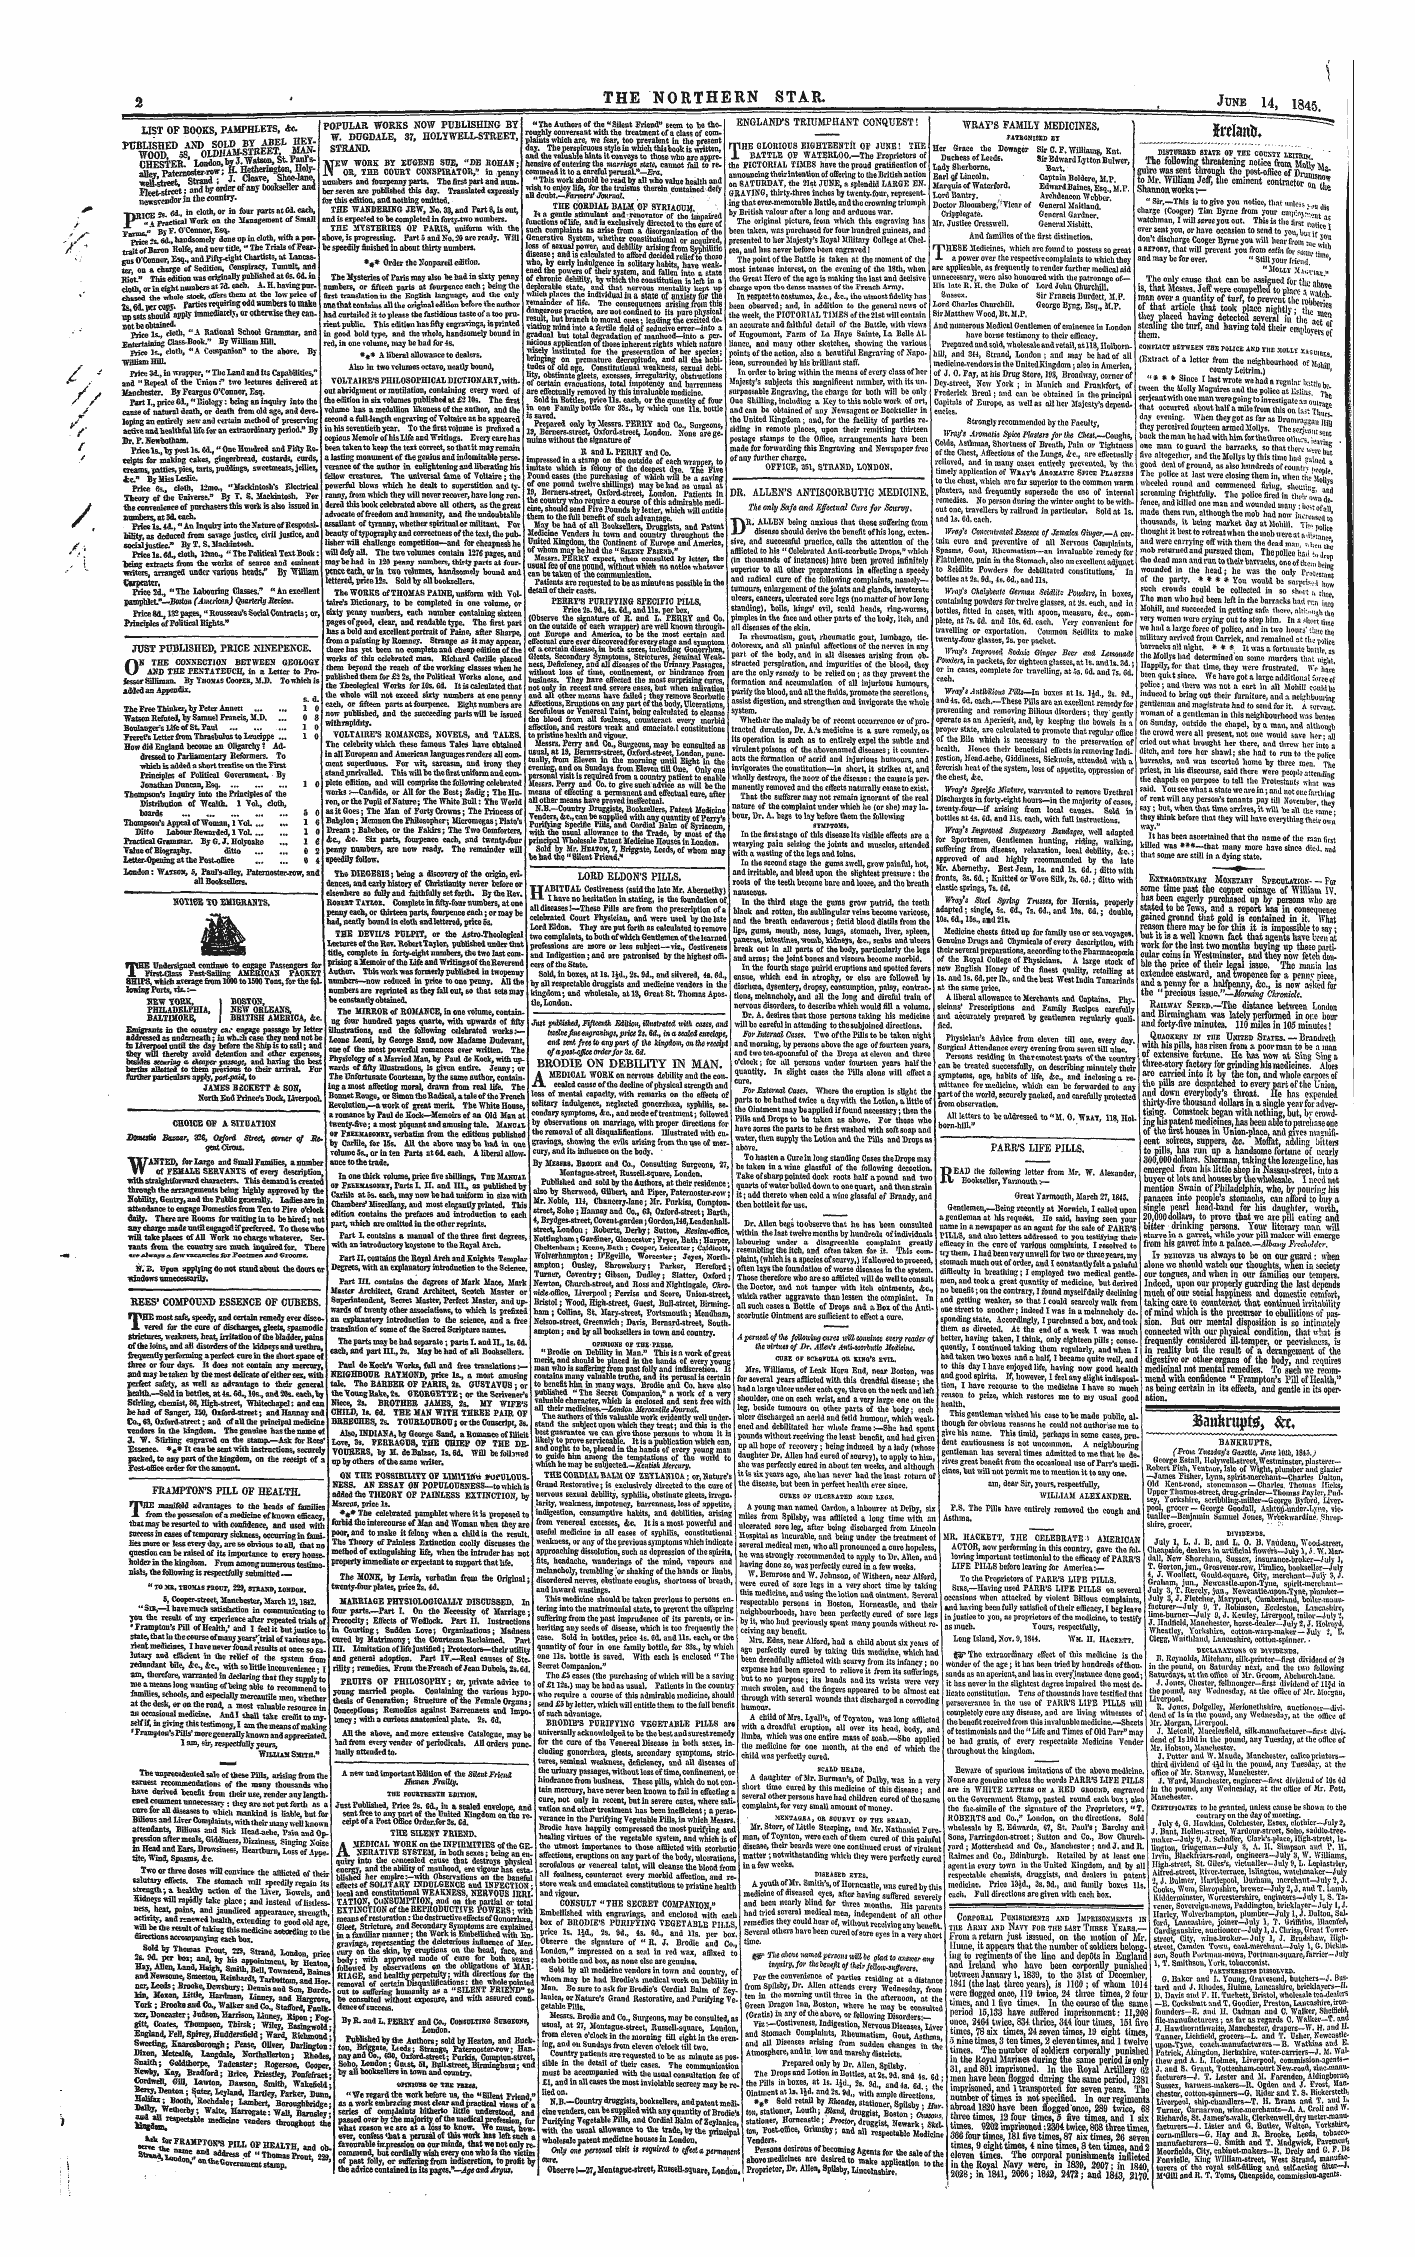 Northern Star (1837-1852): jS F Y, 1st edition - Xrdanft*